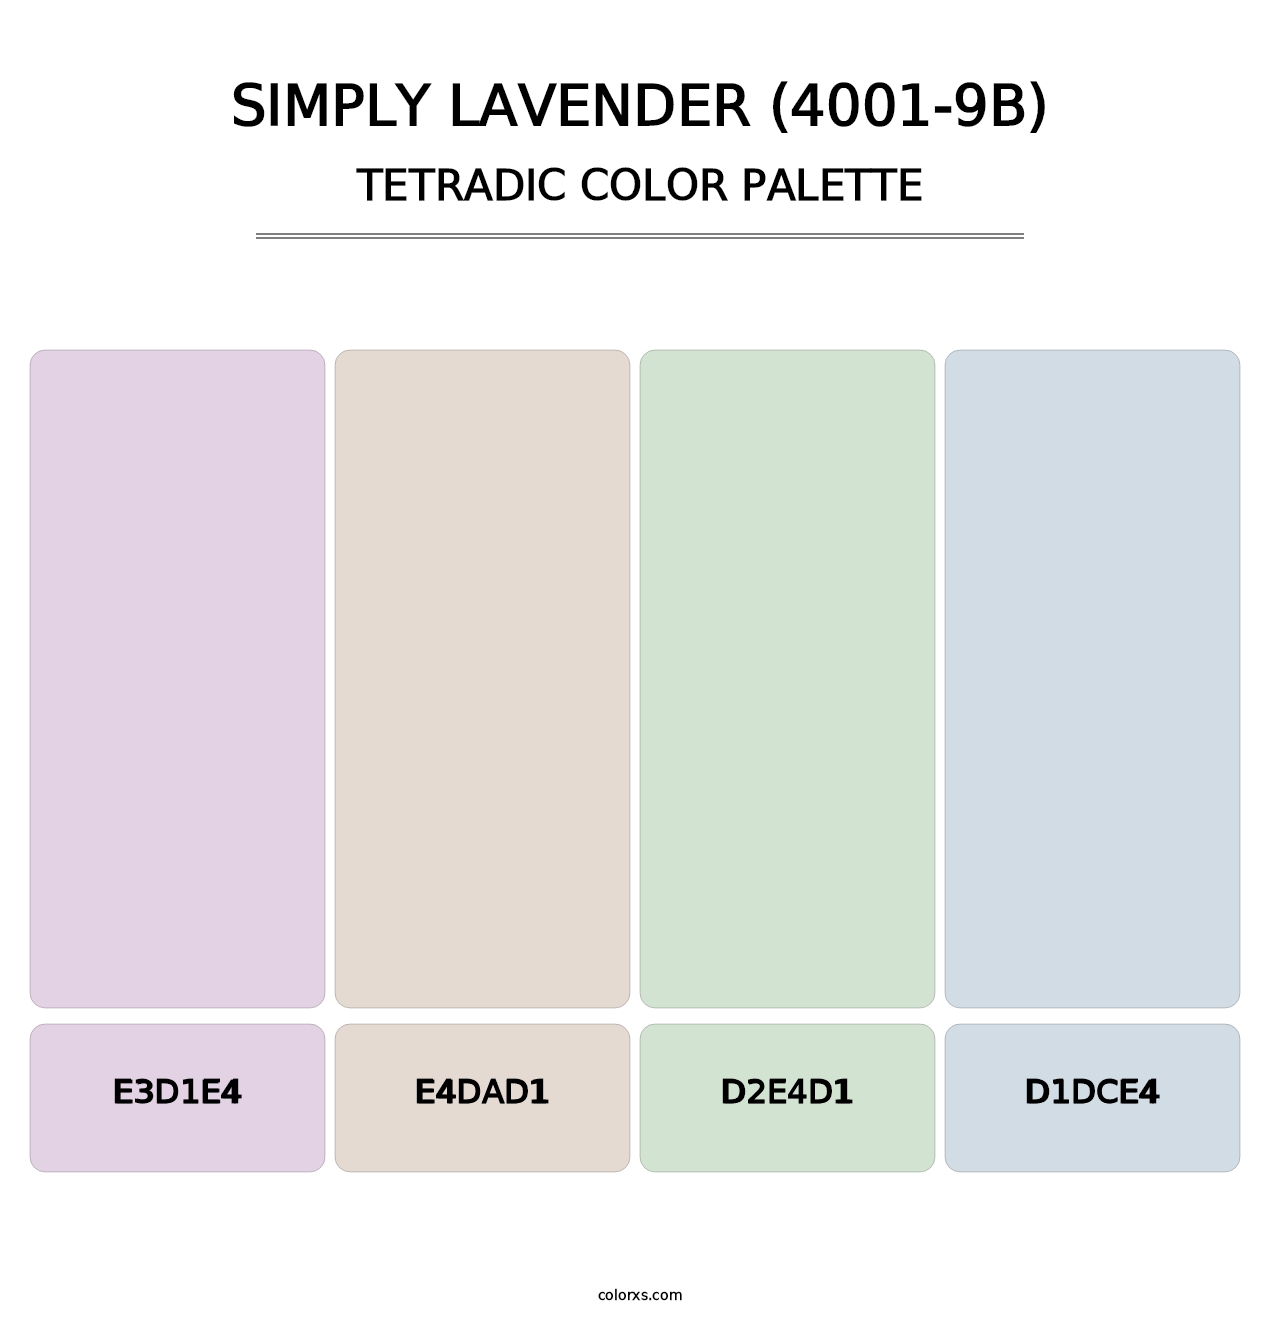 Simply Lavender (4001-9B) - Tetradic Color Palette